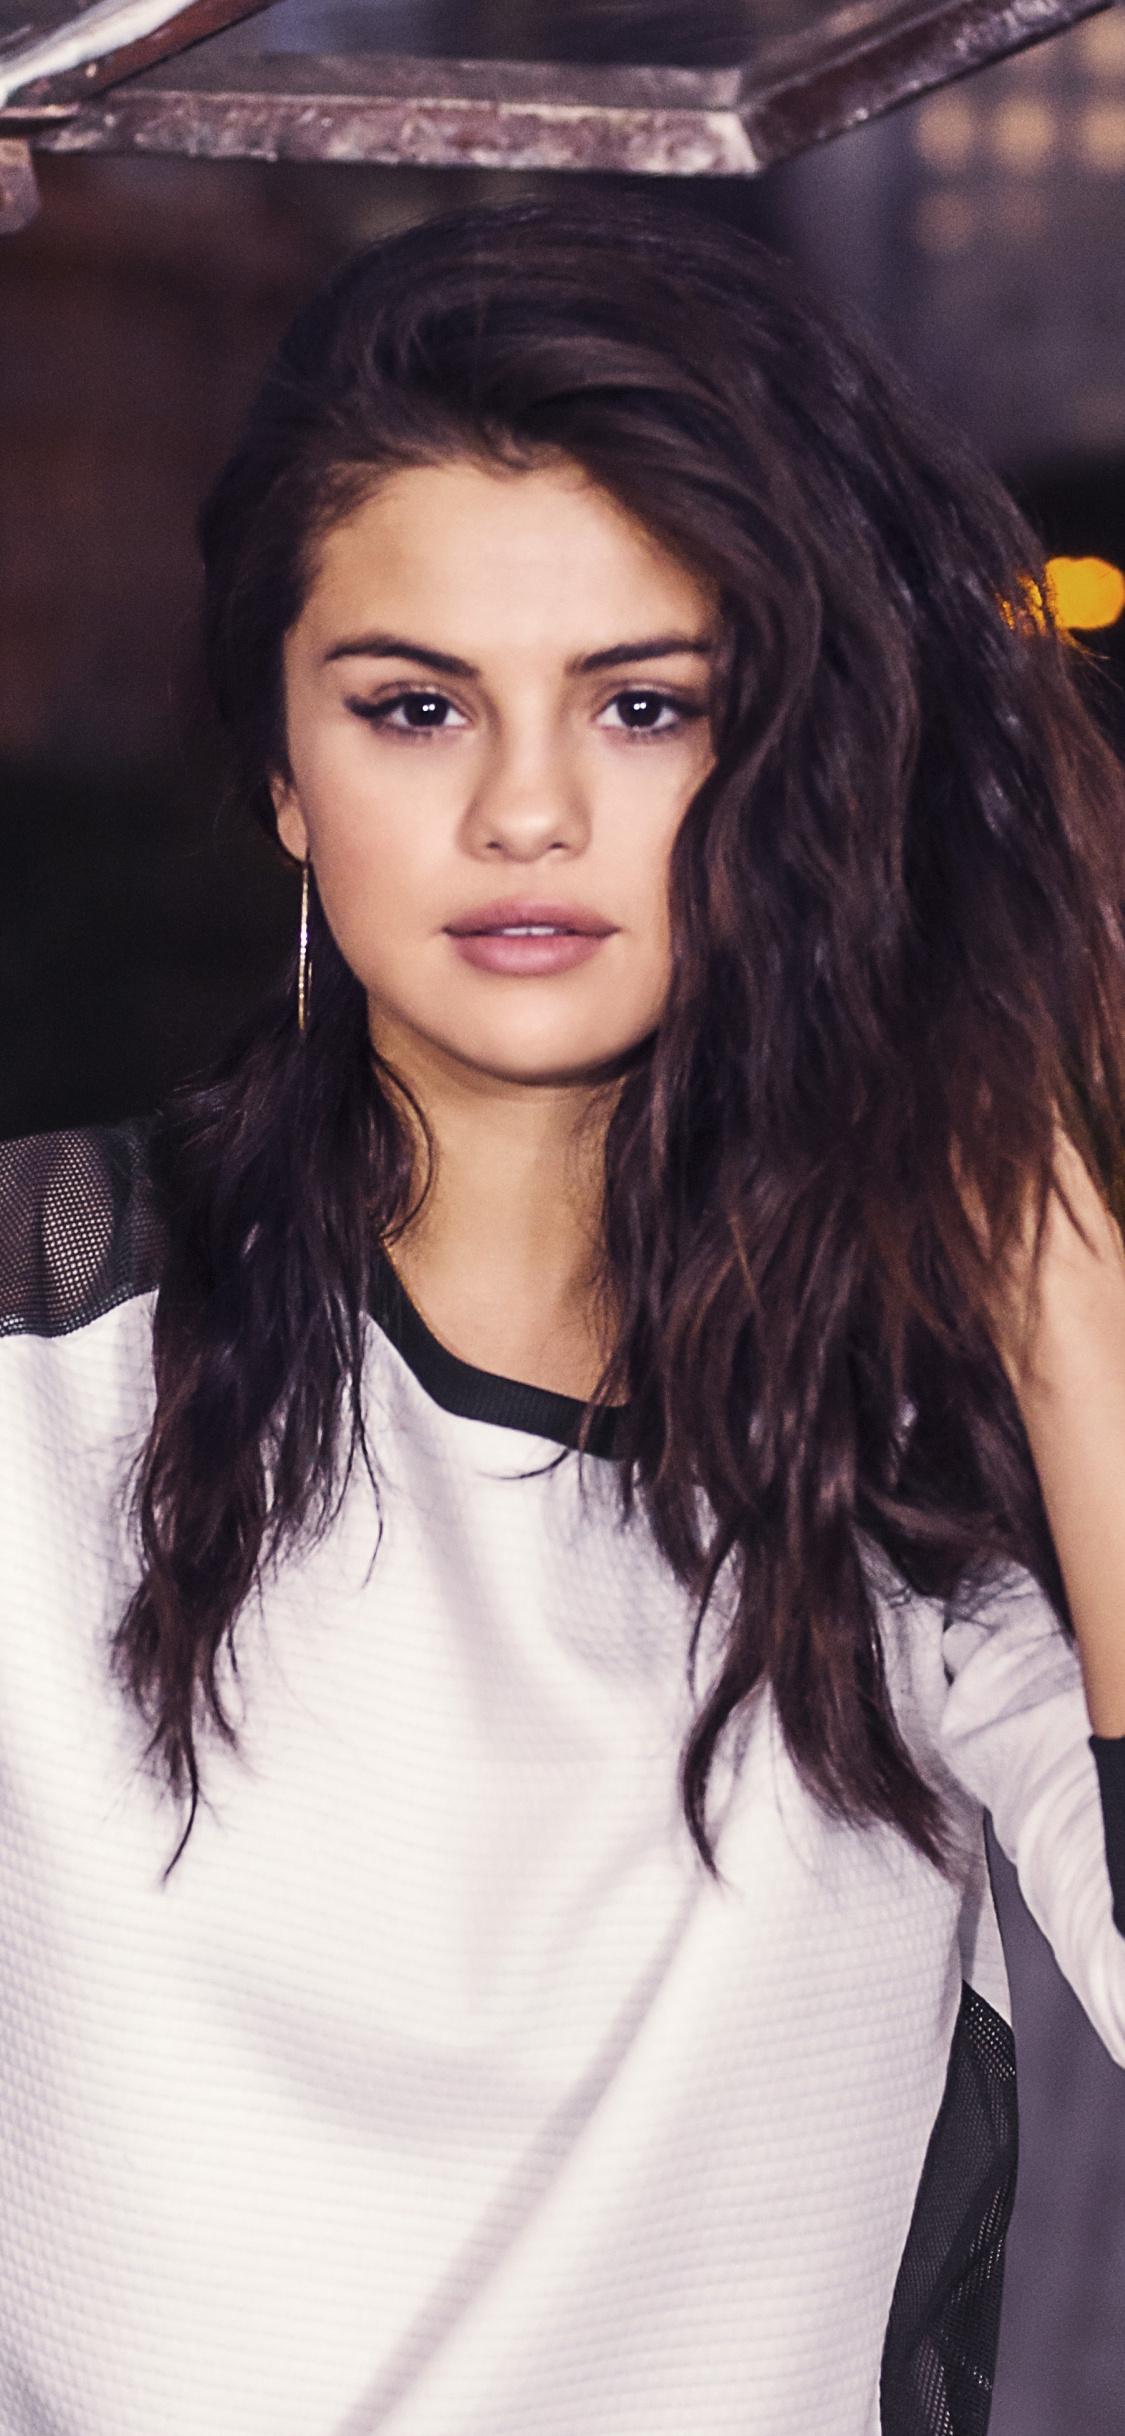 Selena Gomez 2020 Mobile Wallpapers - Wallpaper Cave